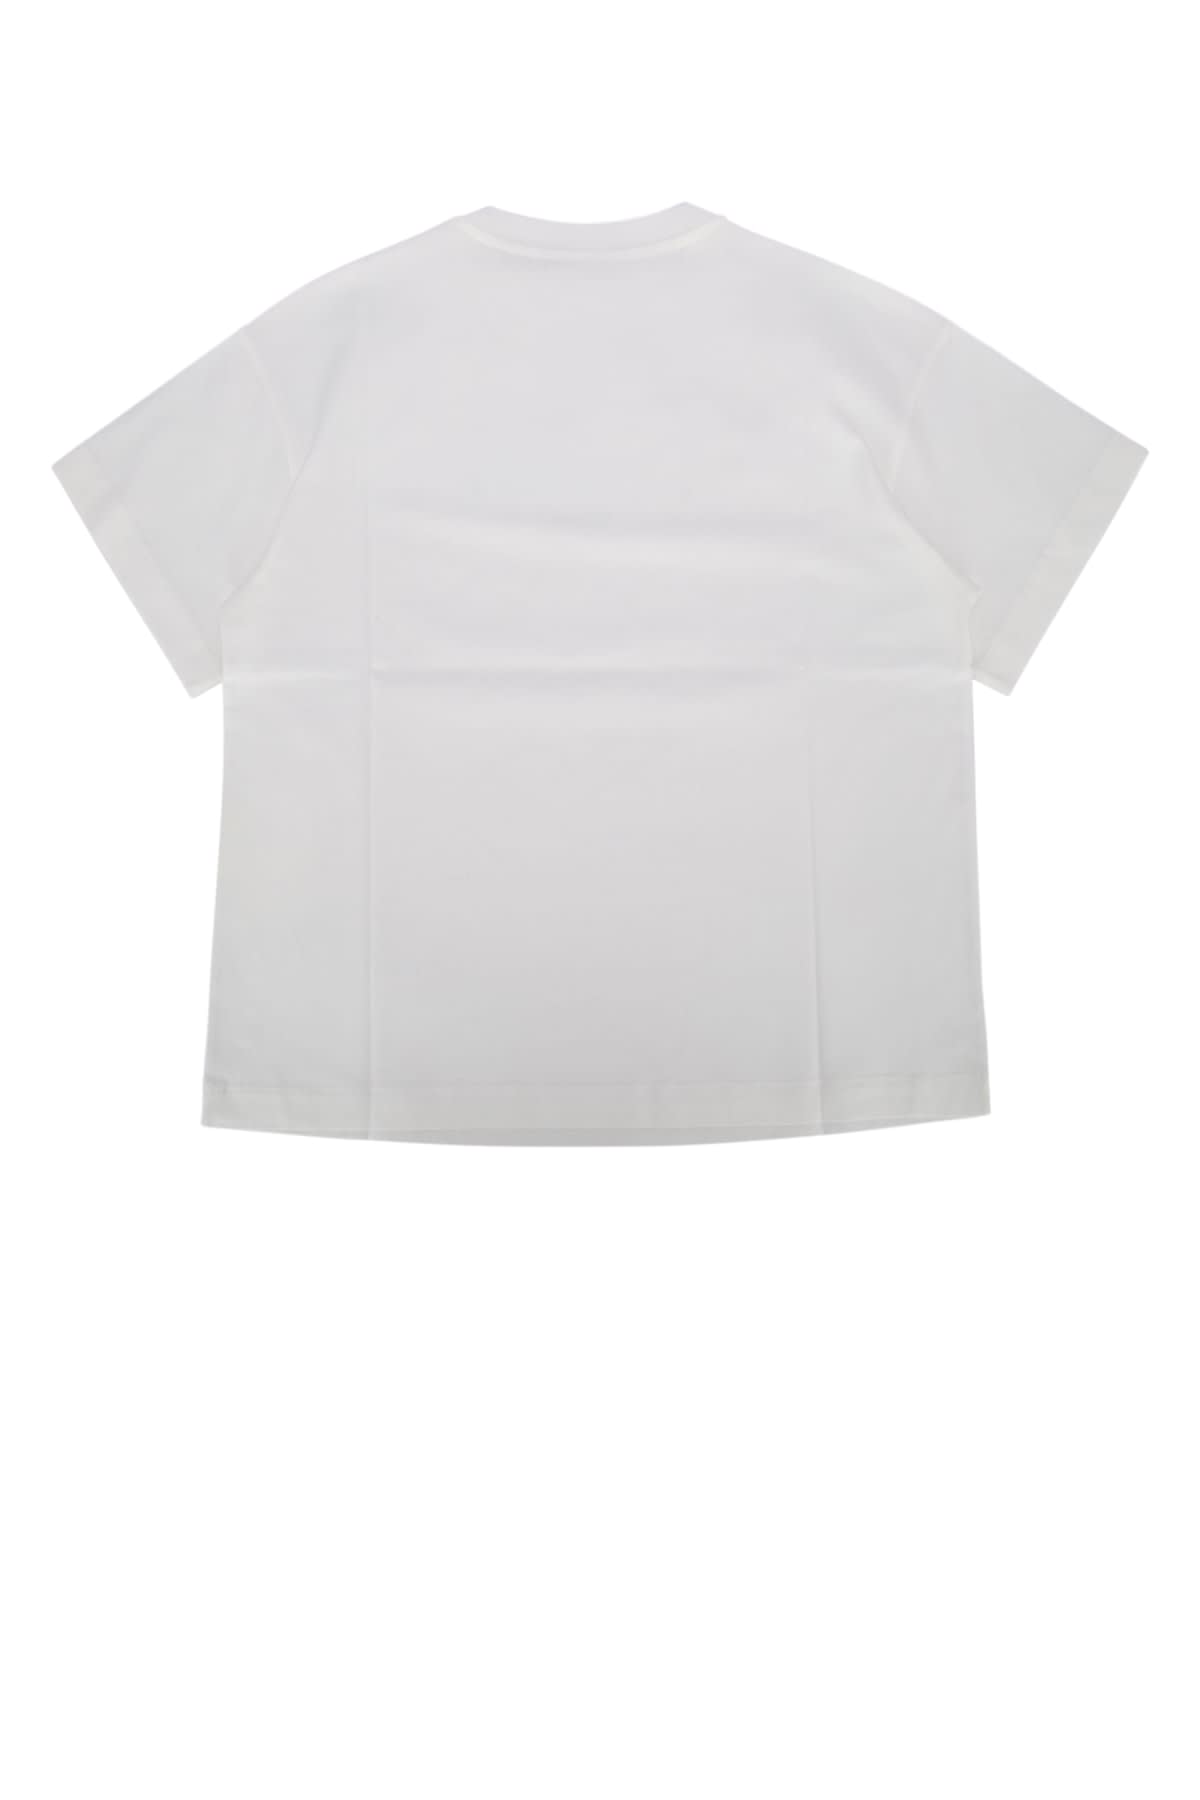 Fendi Kids' T-shirt In Whiteblack